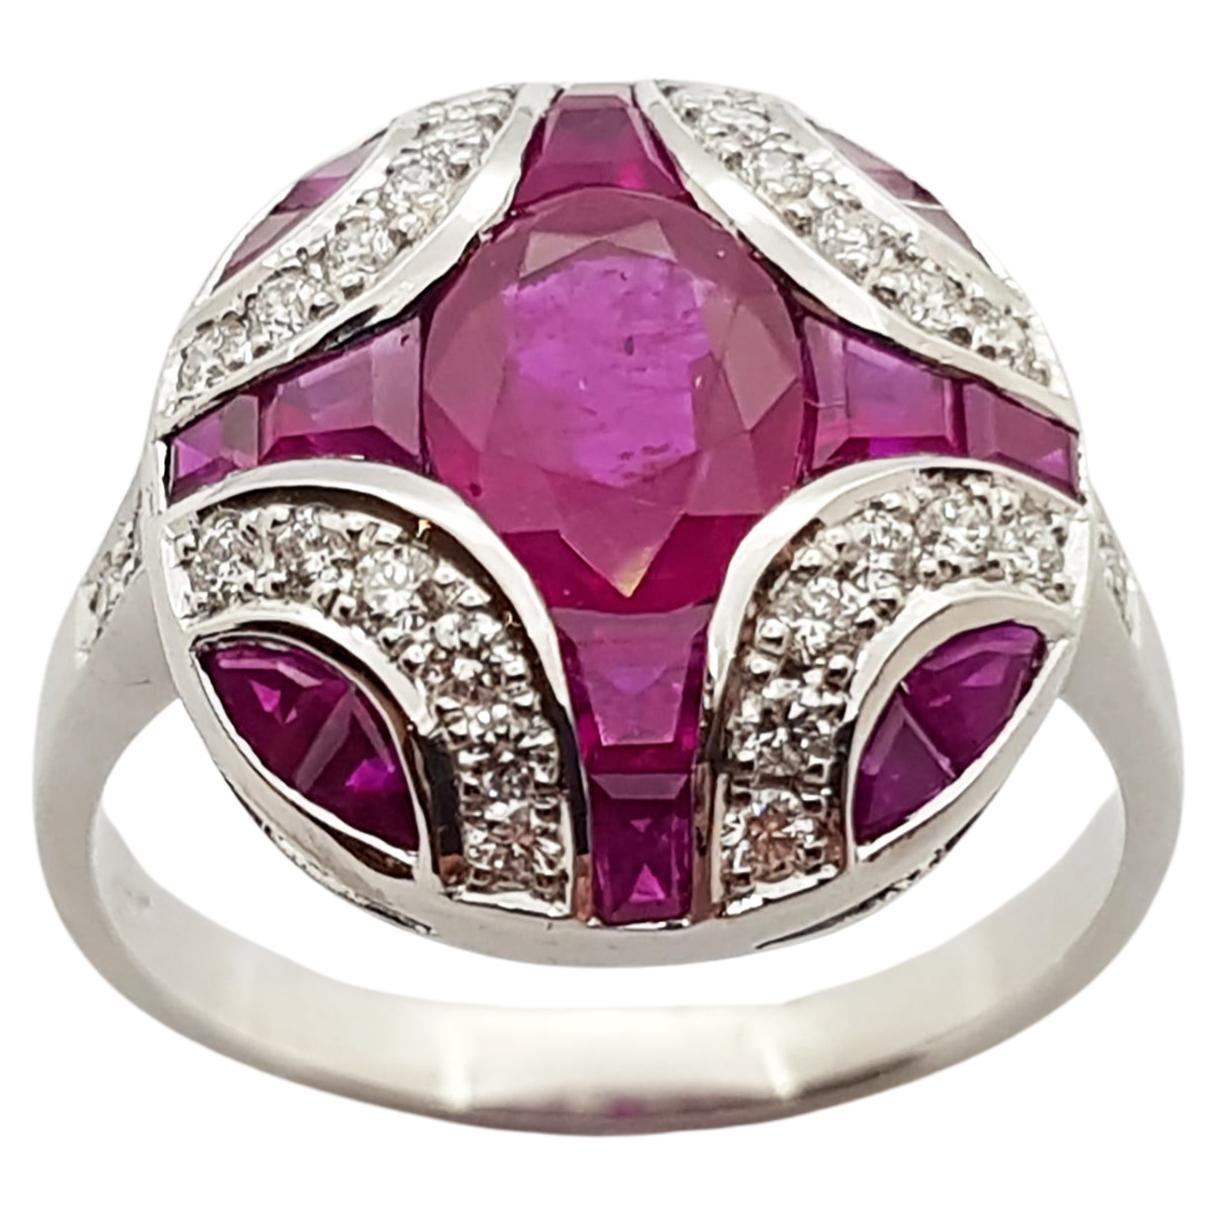 Ruby with Diamond Ring Set in 18 Karat White Gold Settings